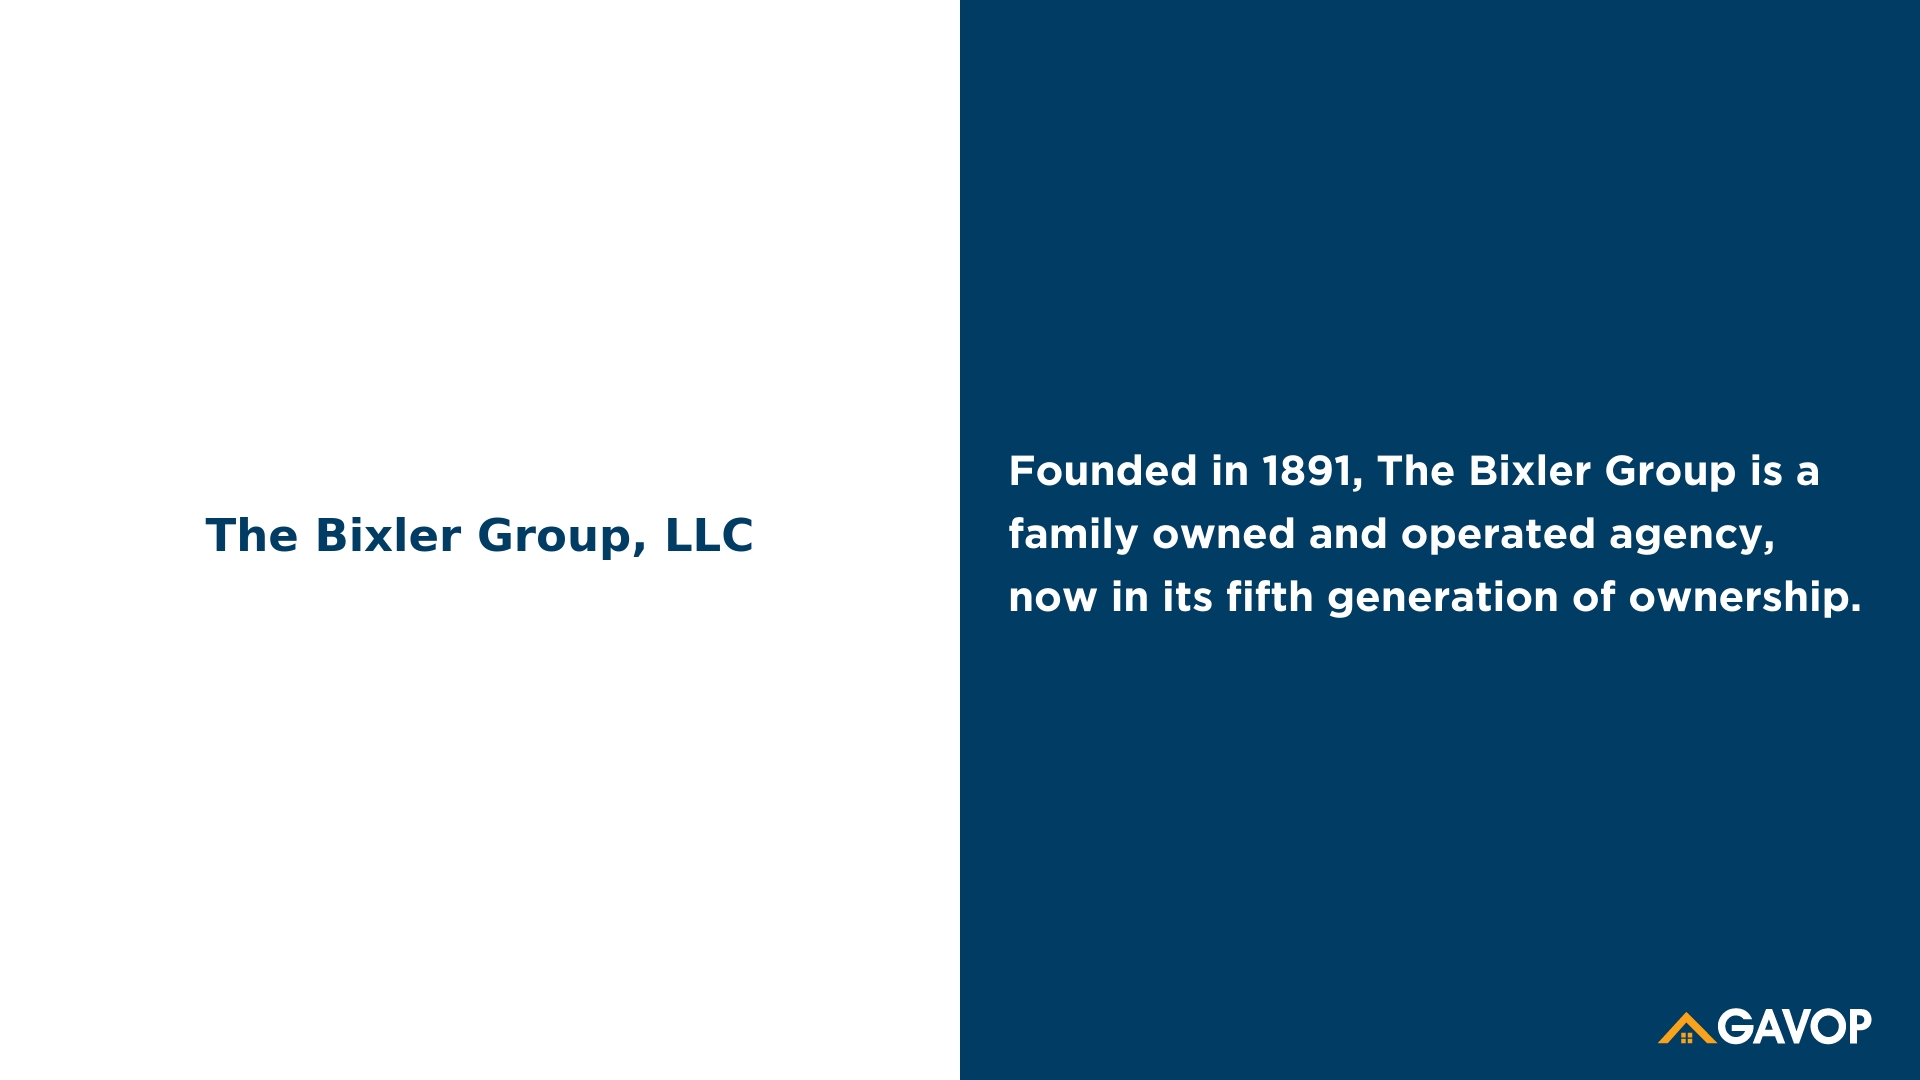 The Bixler Group, LLC